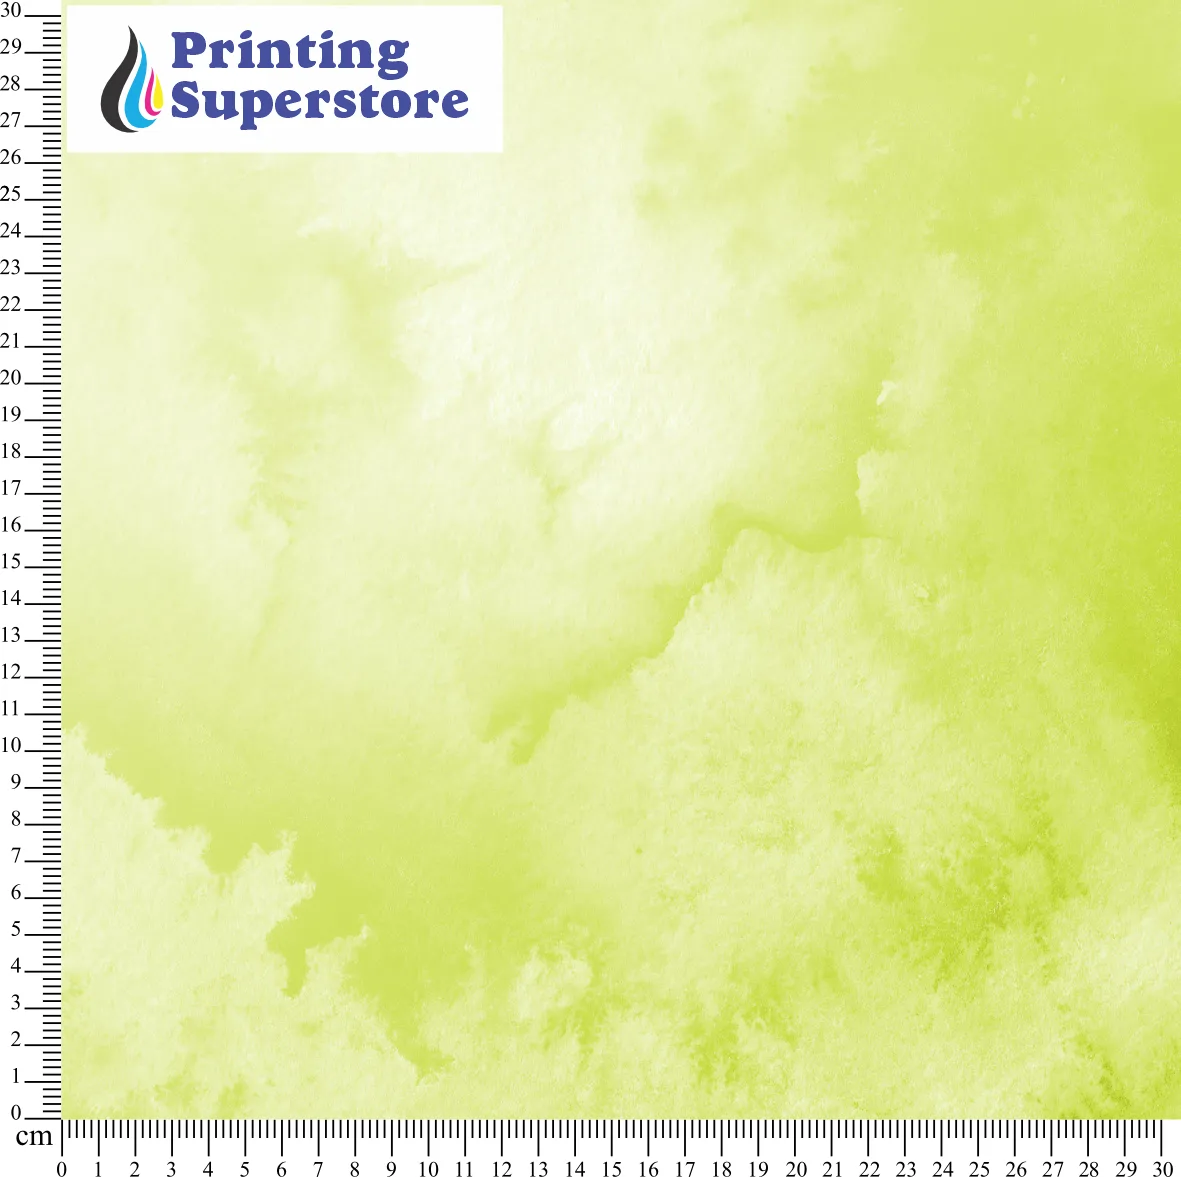 Green Watercolour theme pattern printed on Self Adhesive Vinyl (SAV), Heat Transfer Vinyl (HTV) and Cardstock.